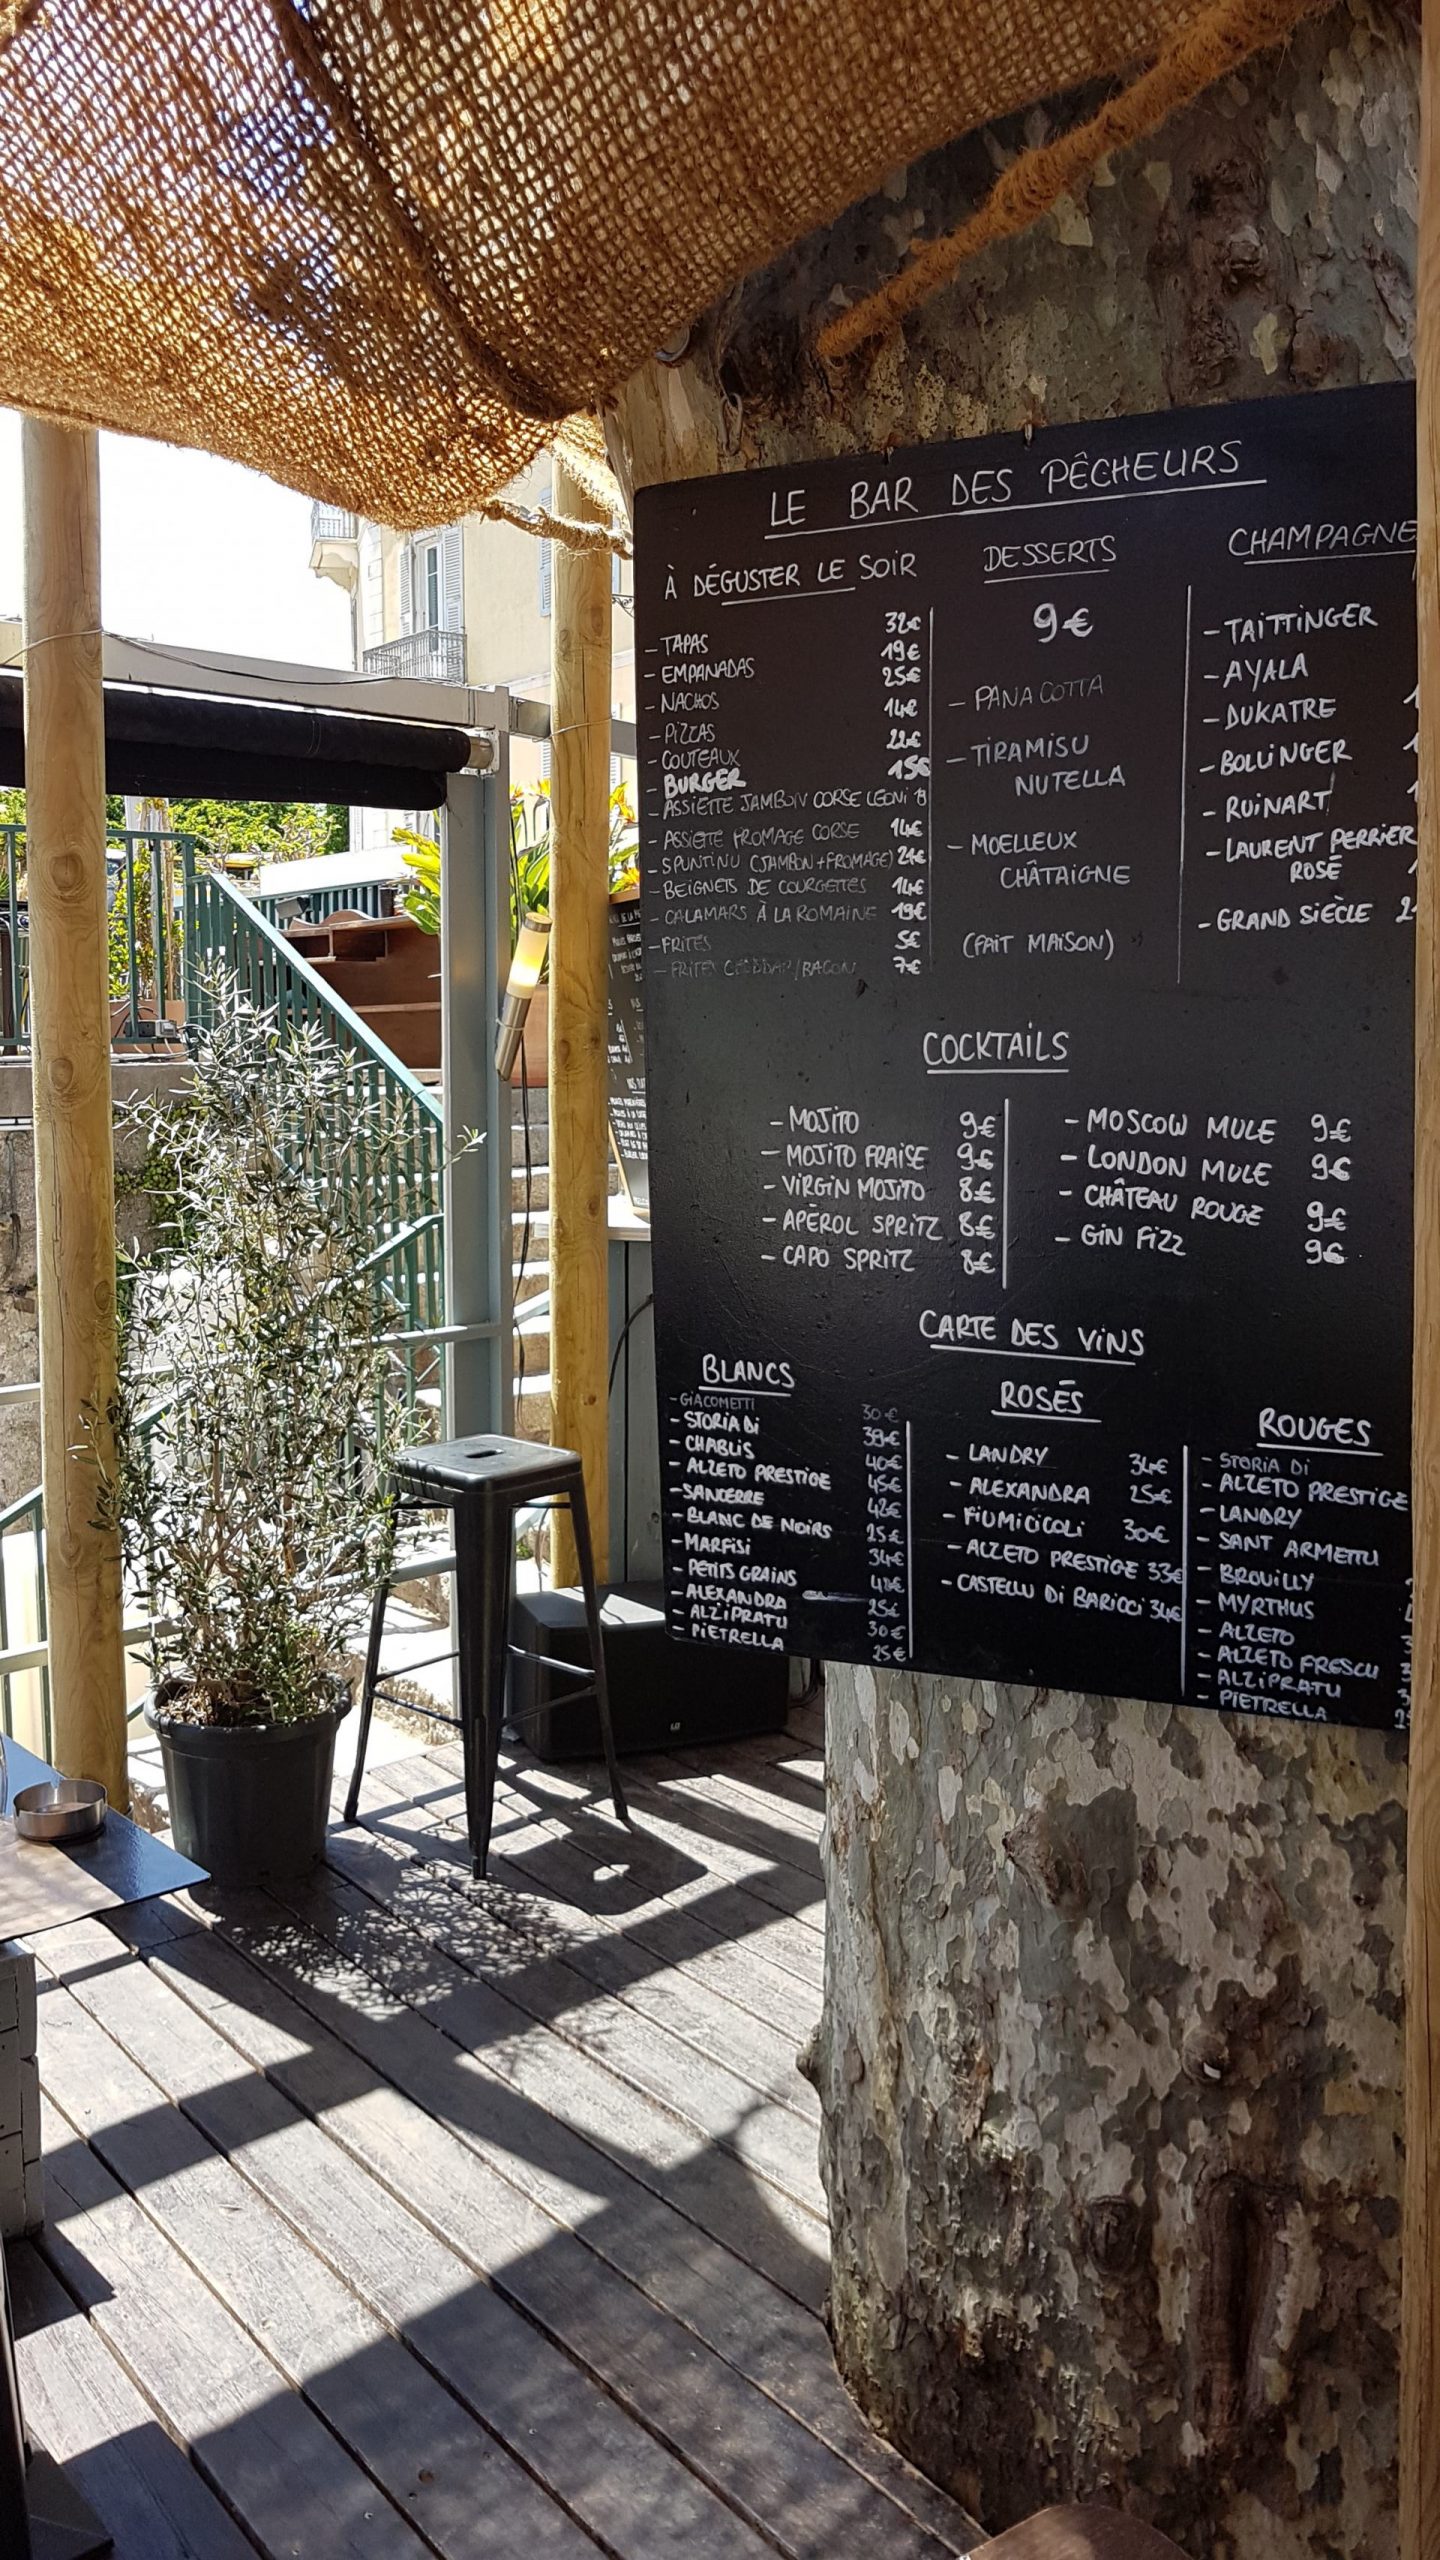 Erfahrung Bewertung Kritik Le Bar De Pecheur Ajaccio Korsika Foodblog Sternestulle